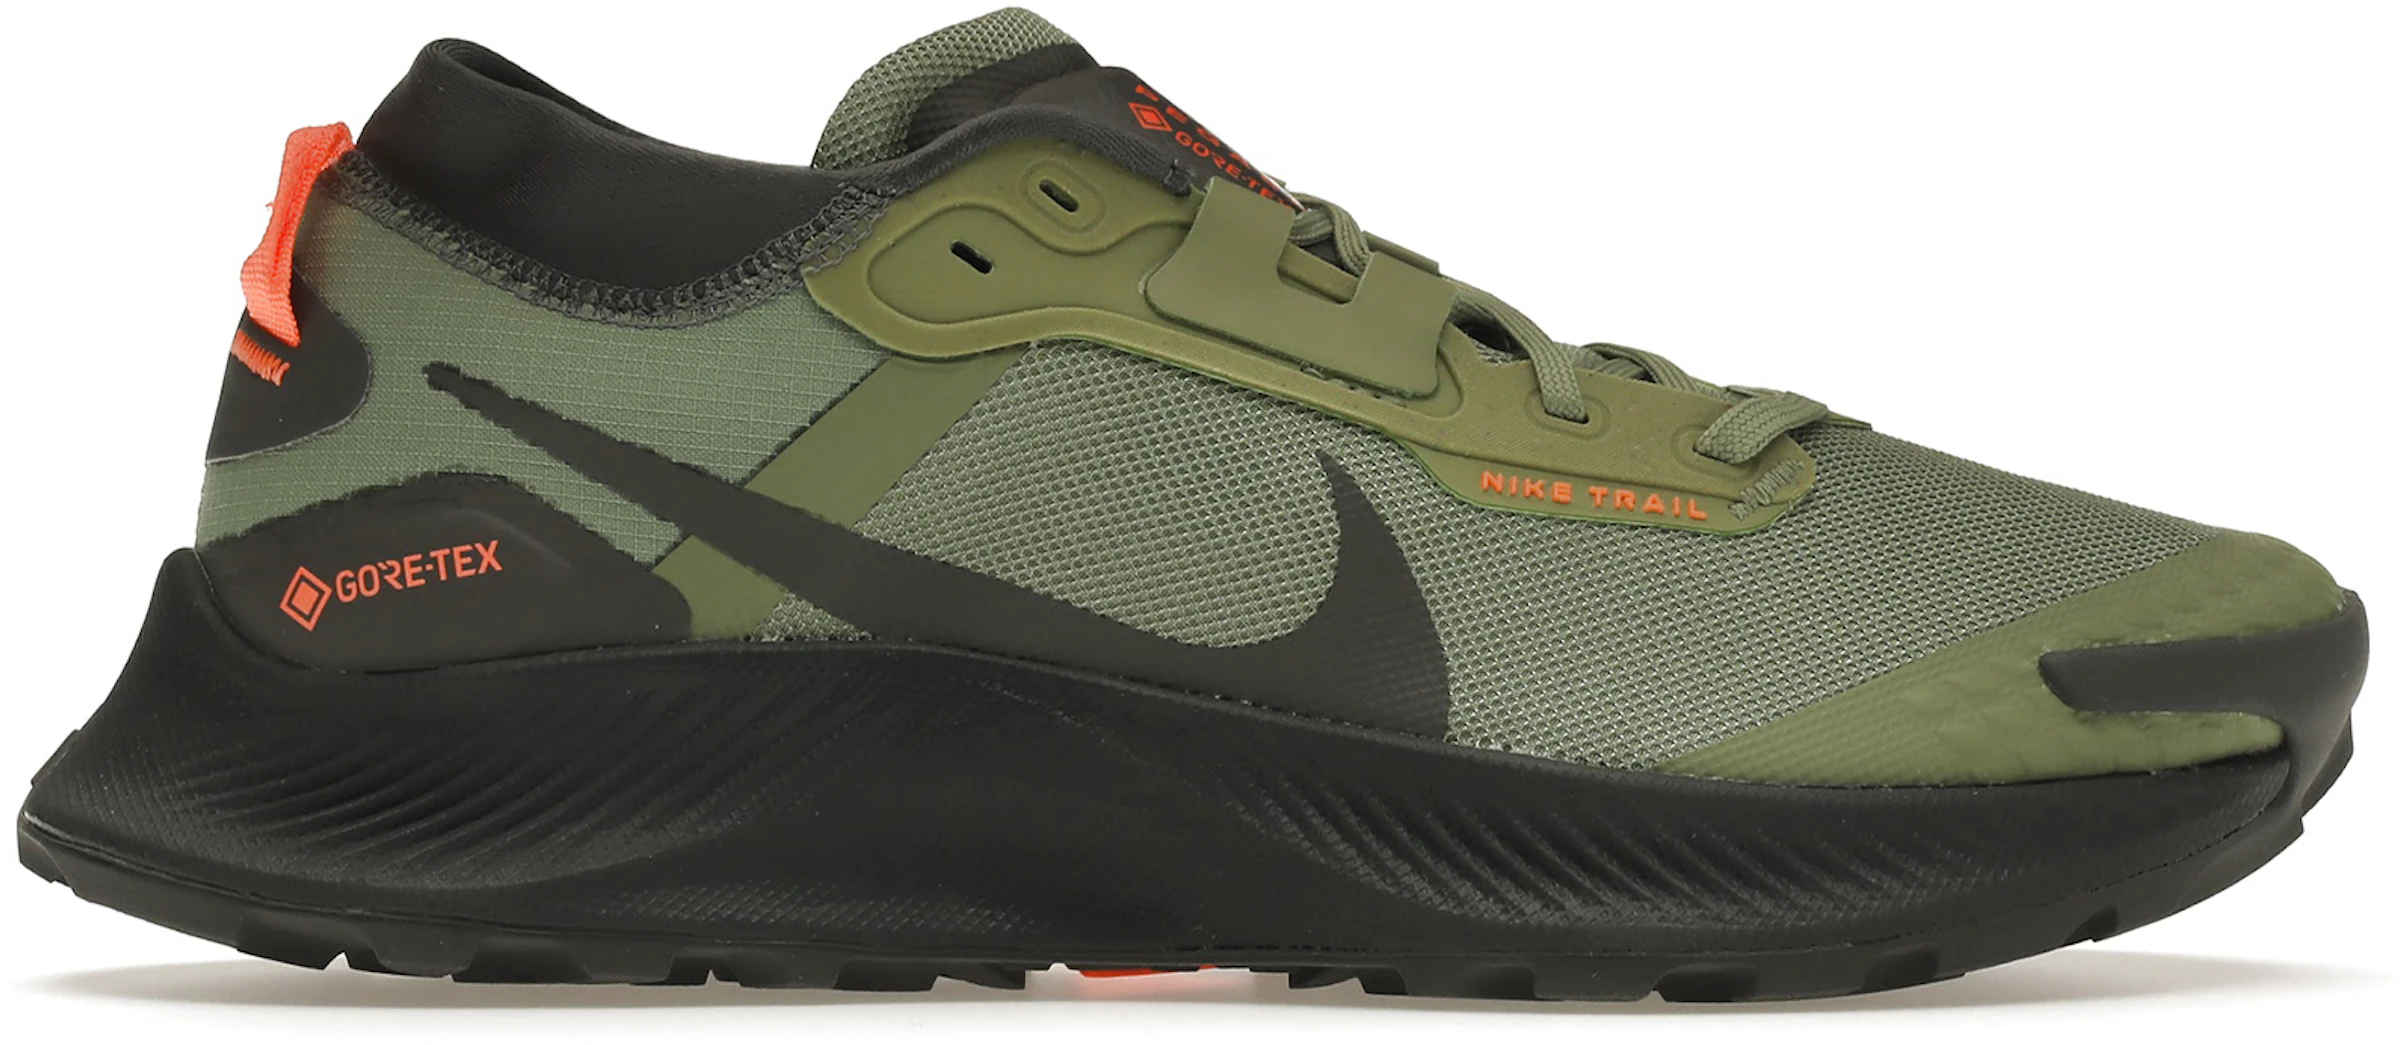 Verrijken lading ondeugd Nike Pegasus Trail 3 Gore-Tex Oil Green Iron Grey Total Orange - DO6728-300  - US